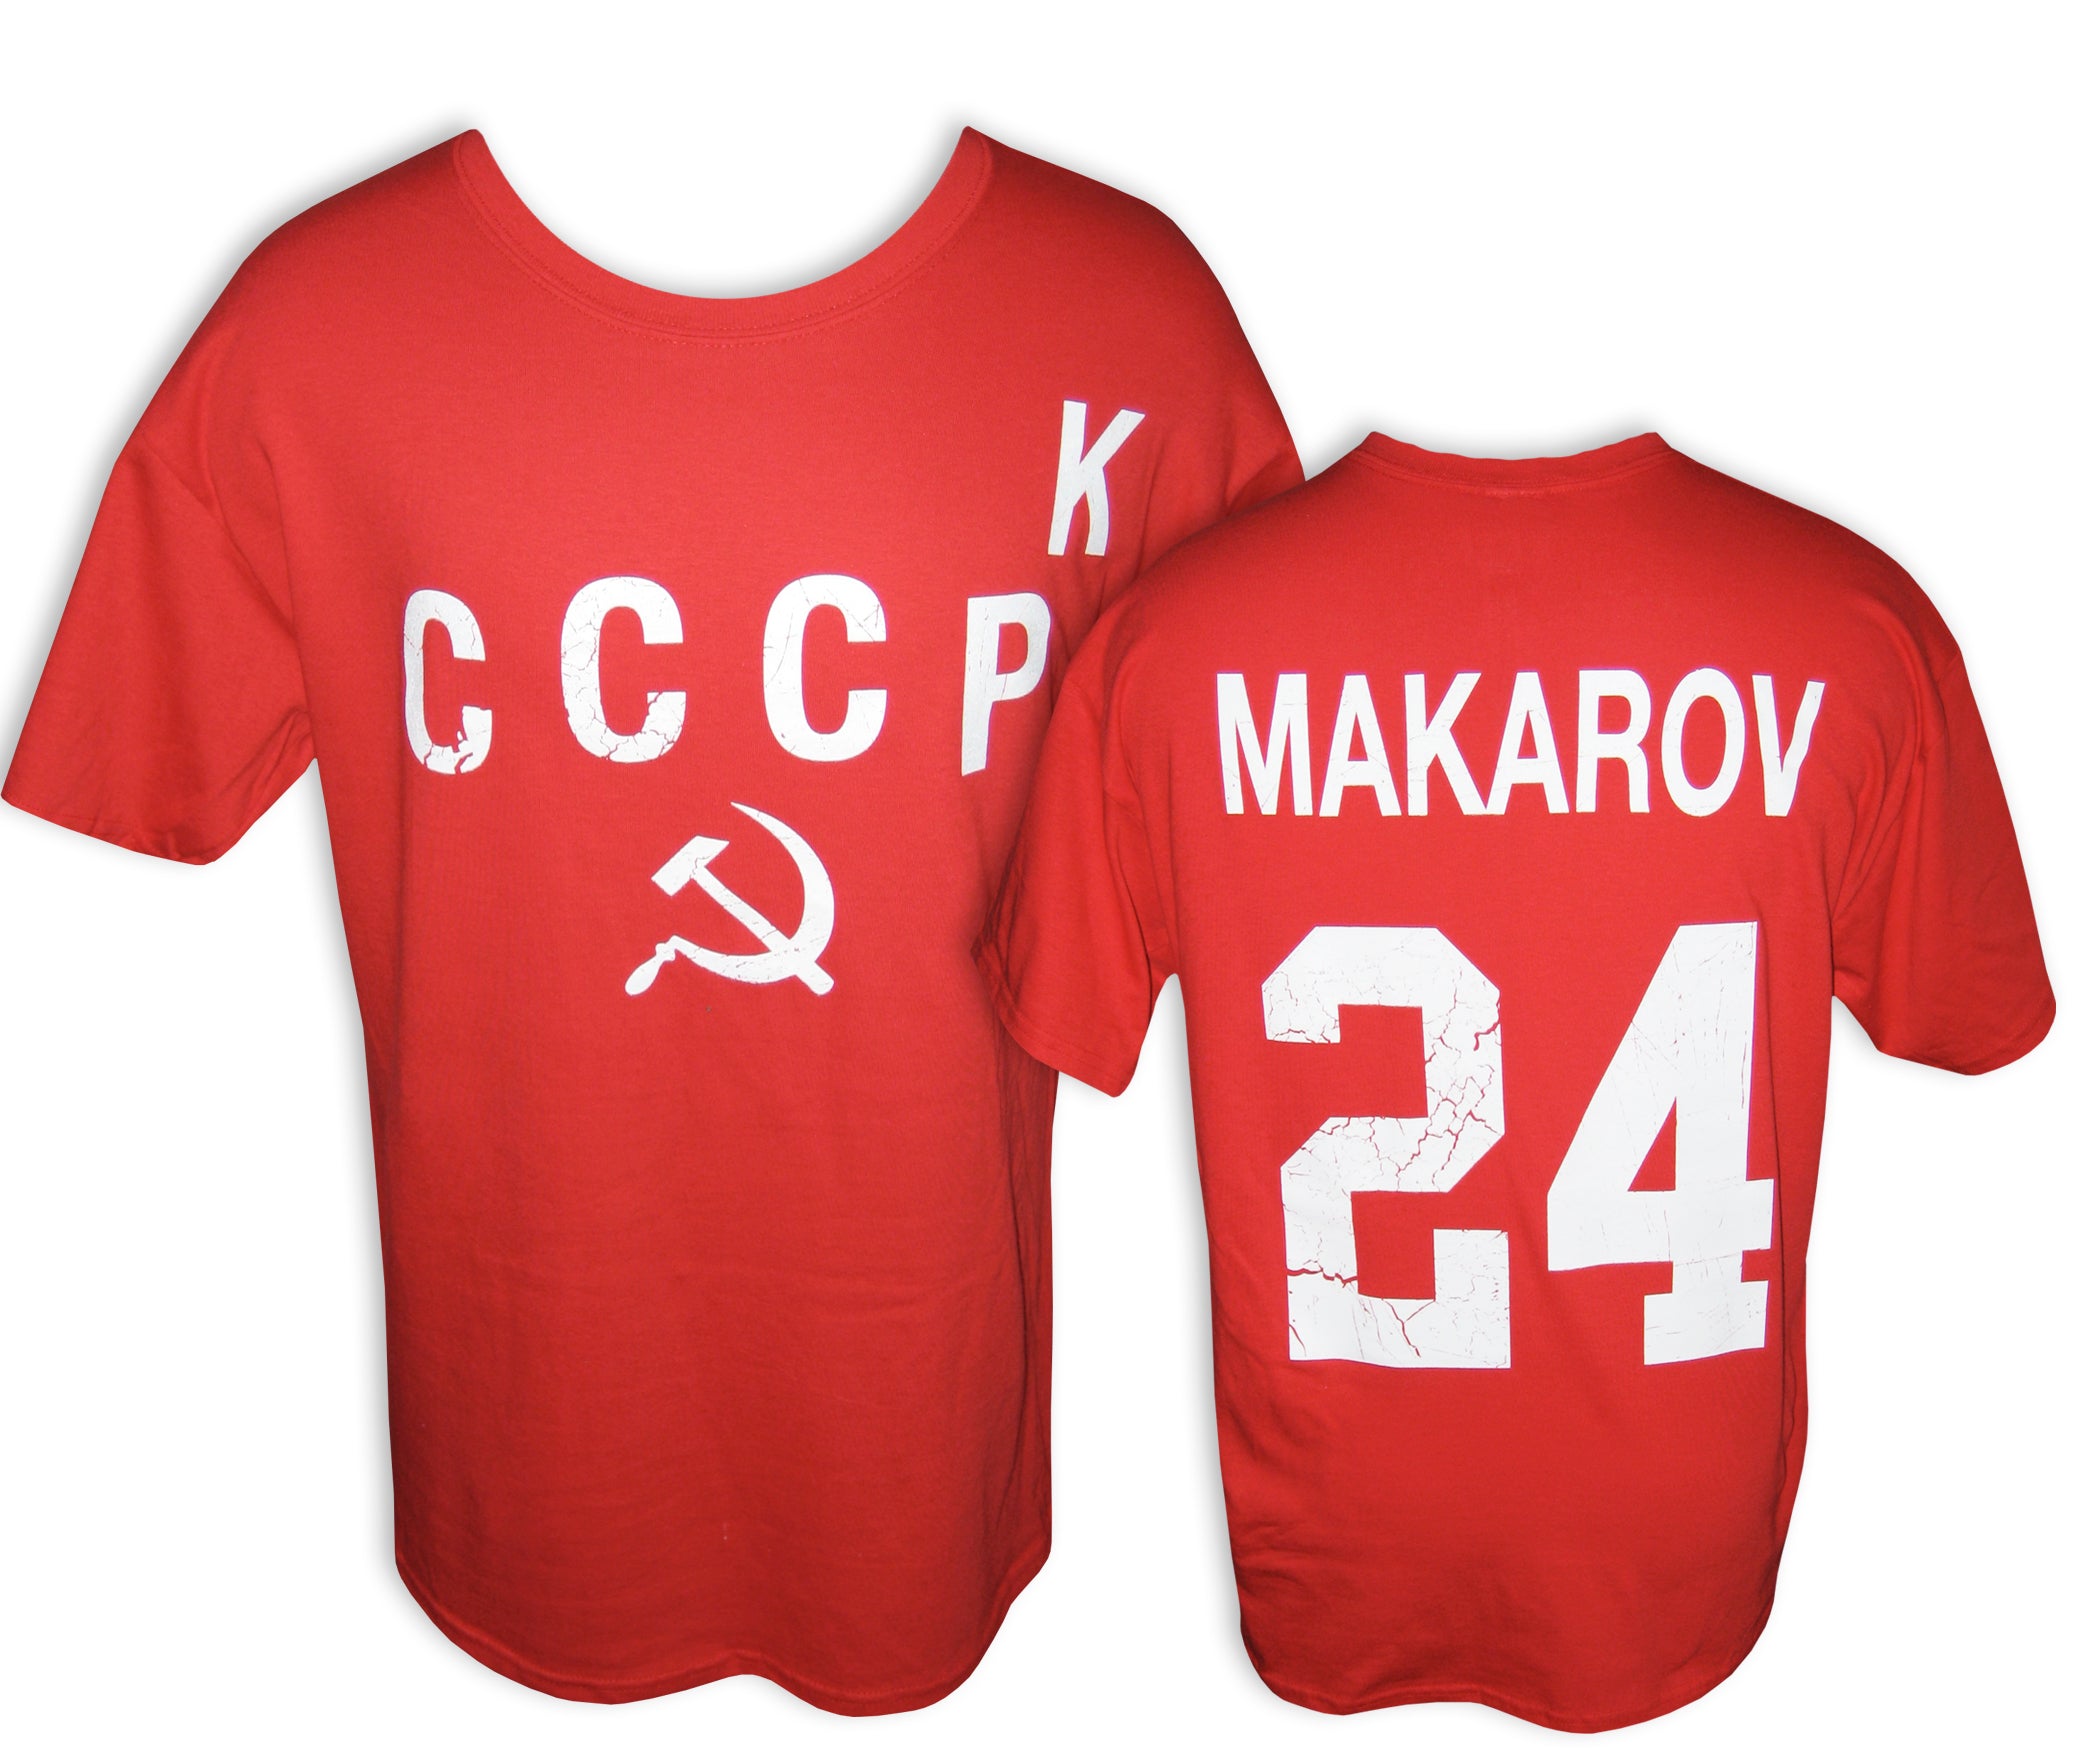 CCCP Red Army #24 MAKAROV Vintage T-shirt